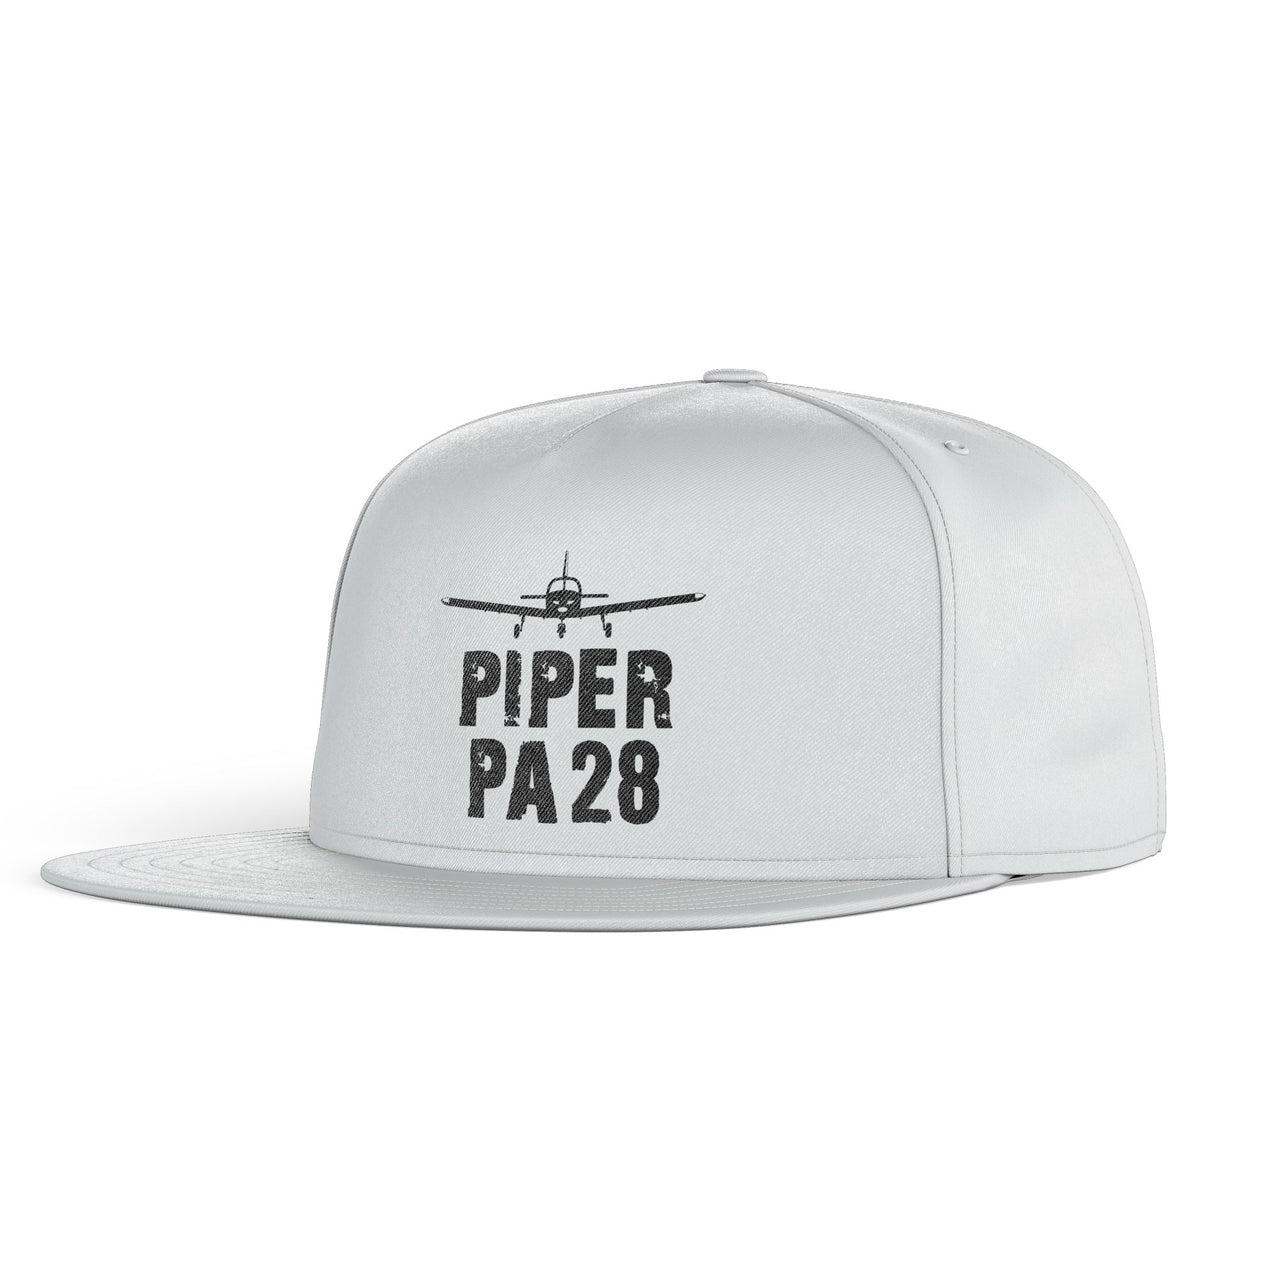 Piper PA28 & Plane Designed Snapback Caps & Hats